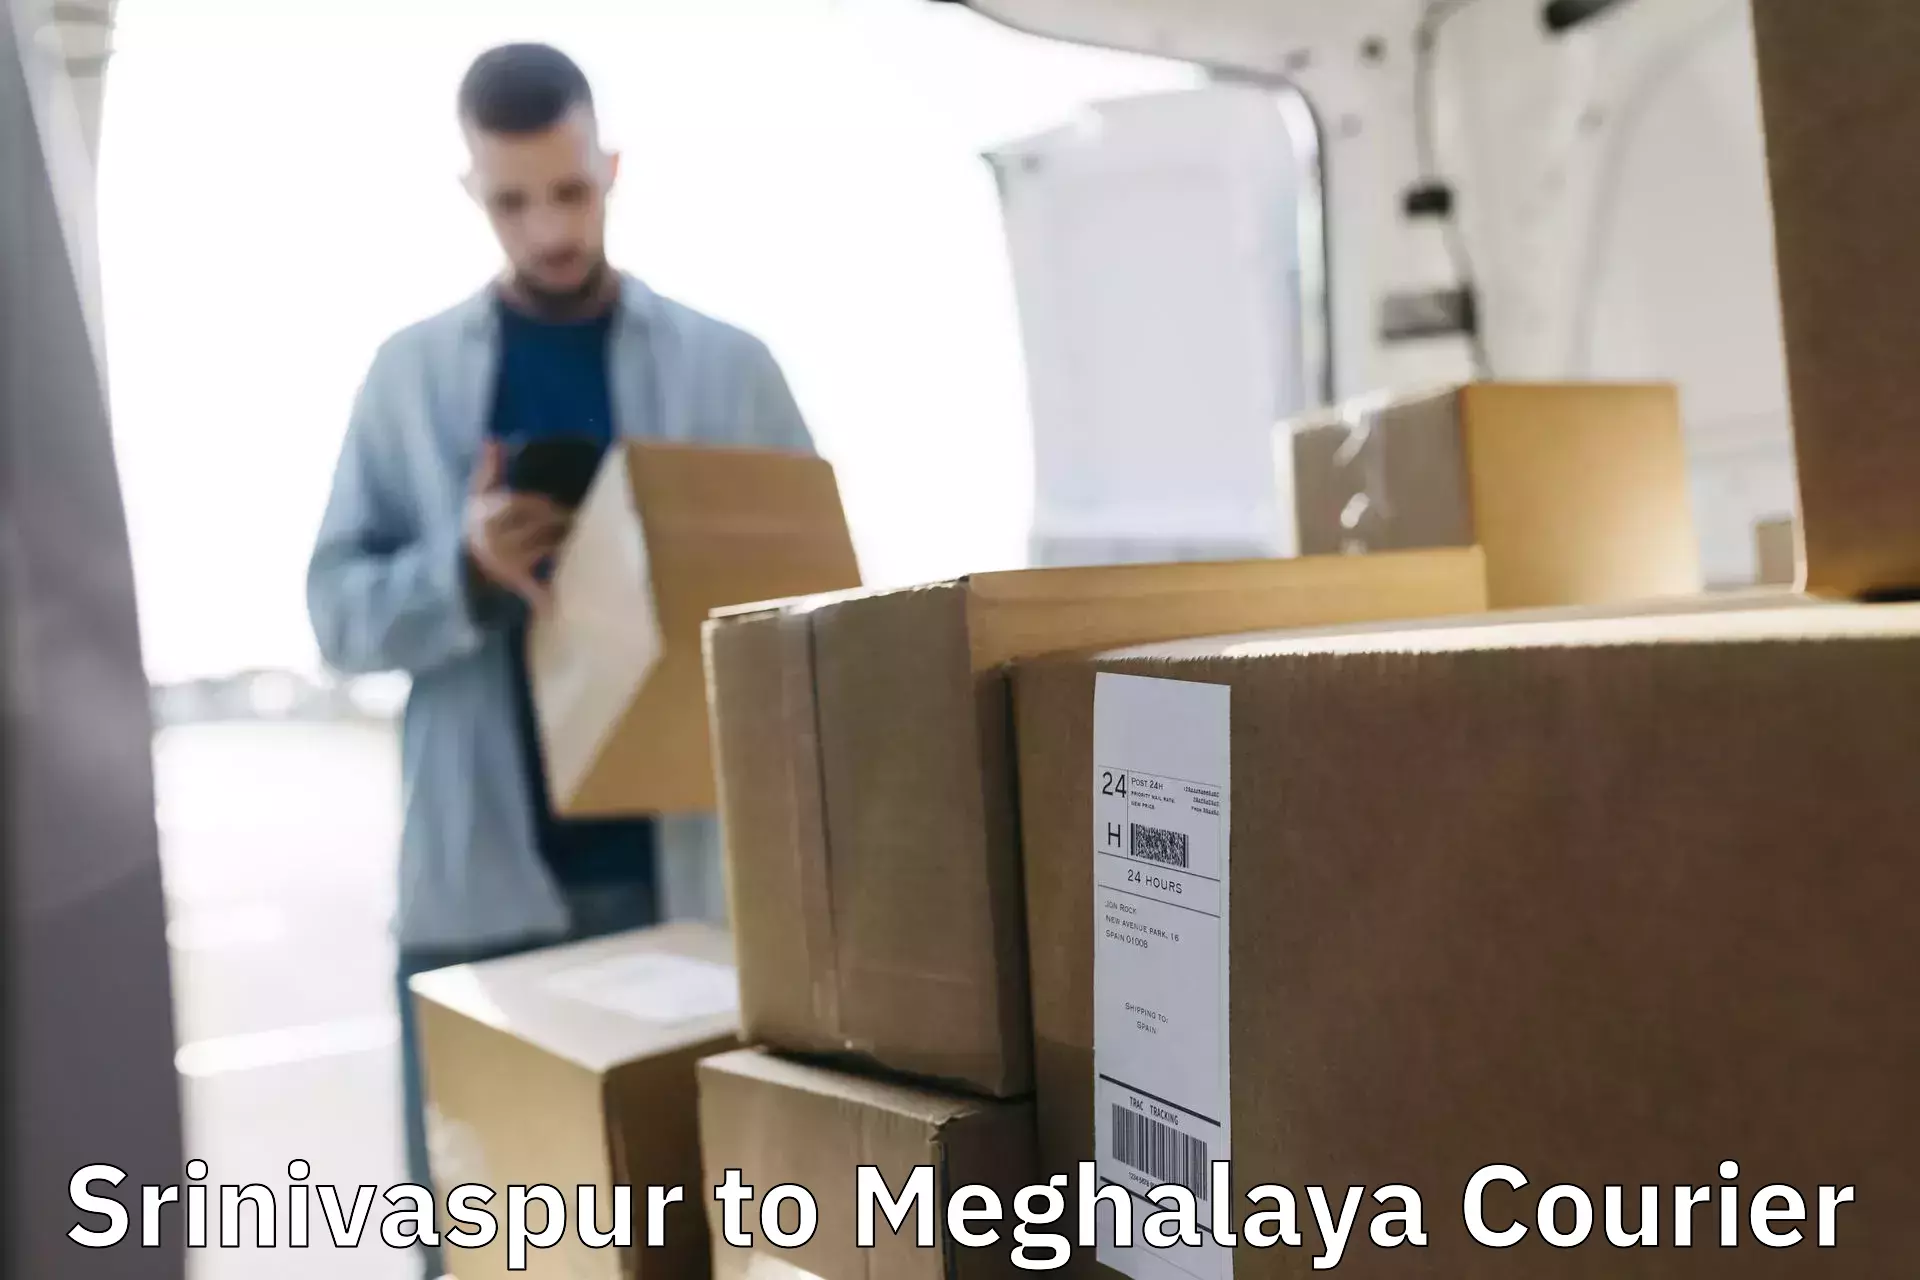 Courier service innovation Srinivaspur to Jowai